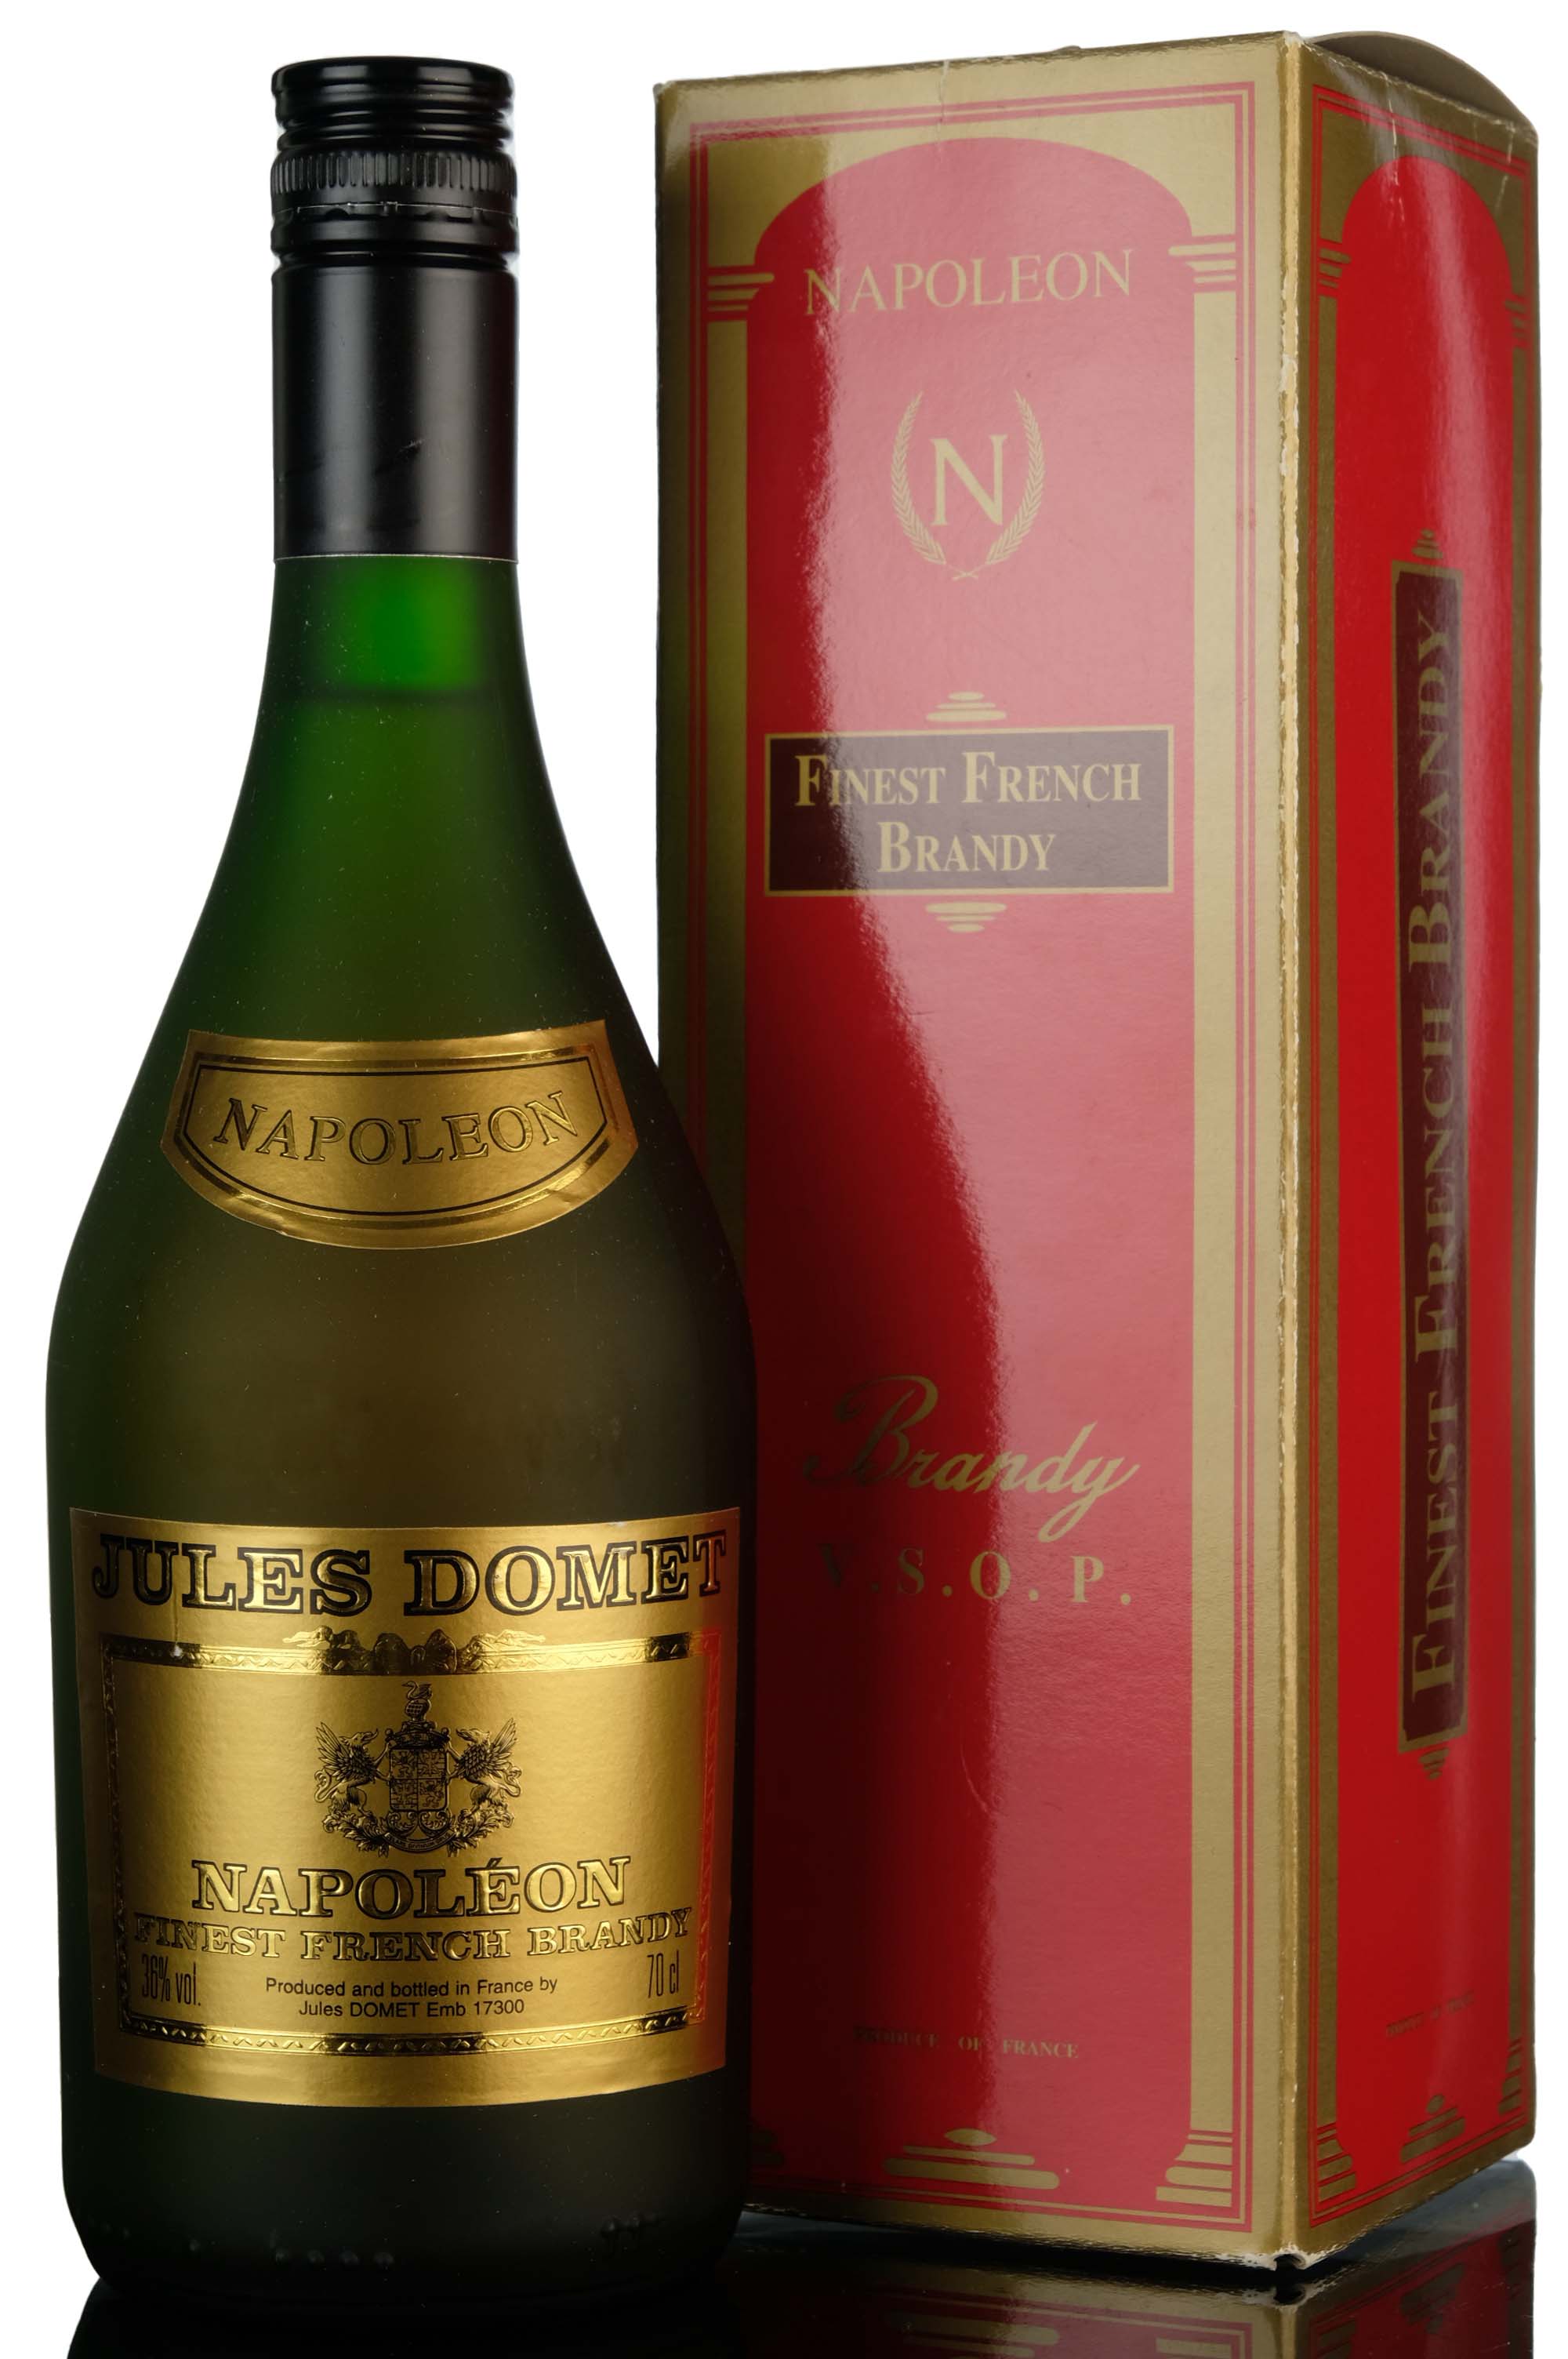 Jules Domet Napoleon Finest French Brandy